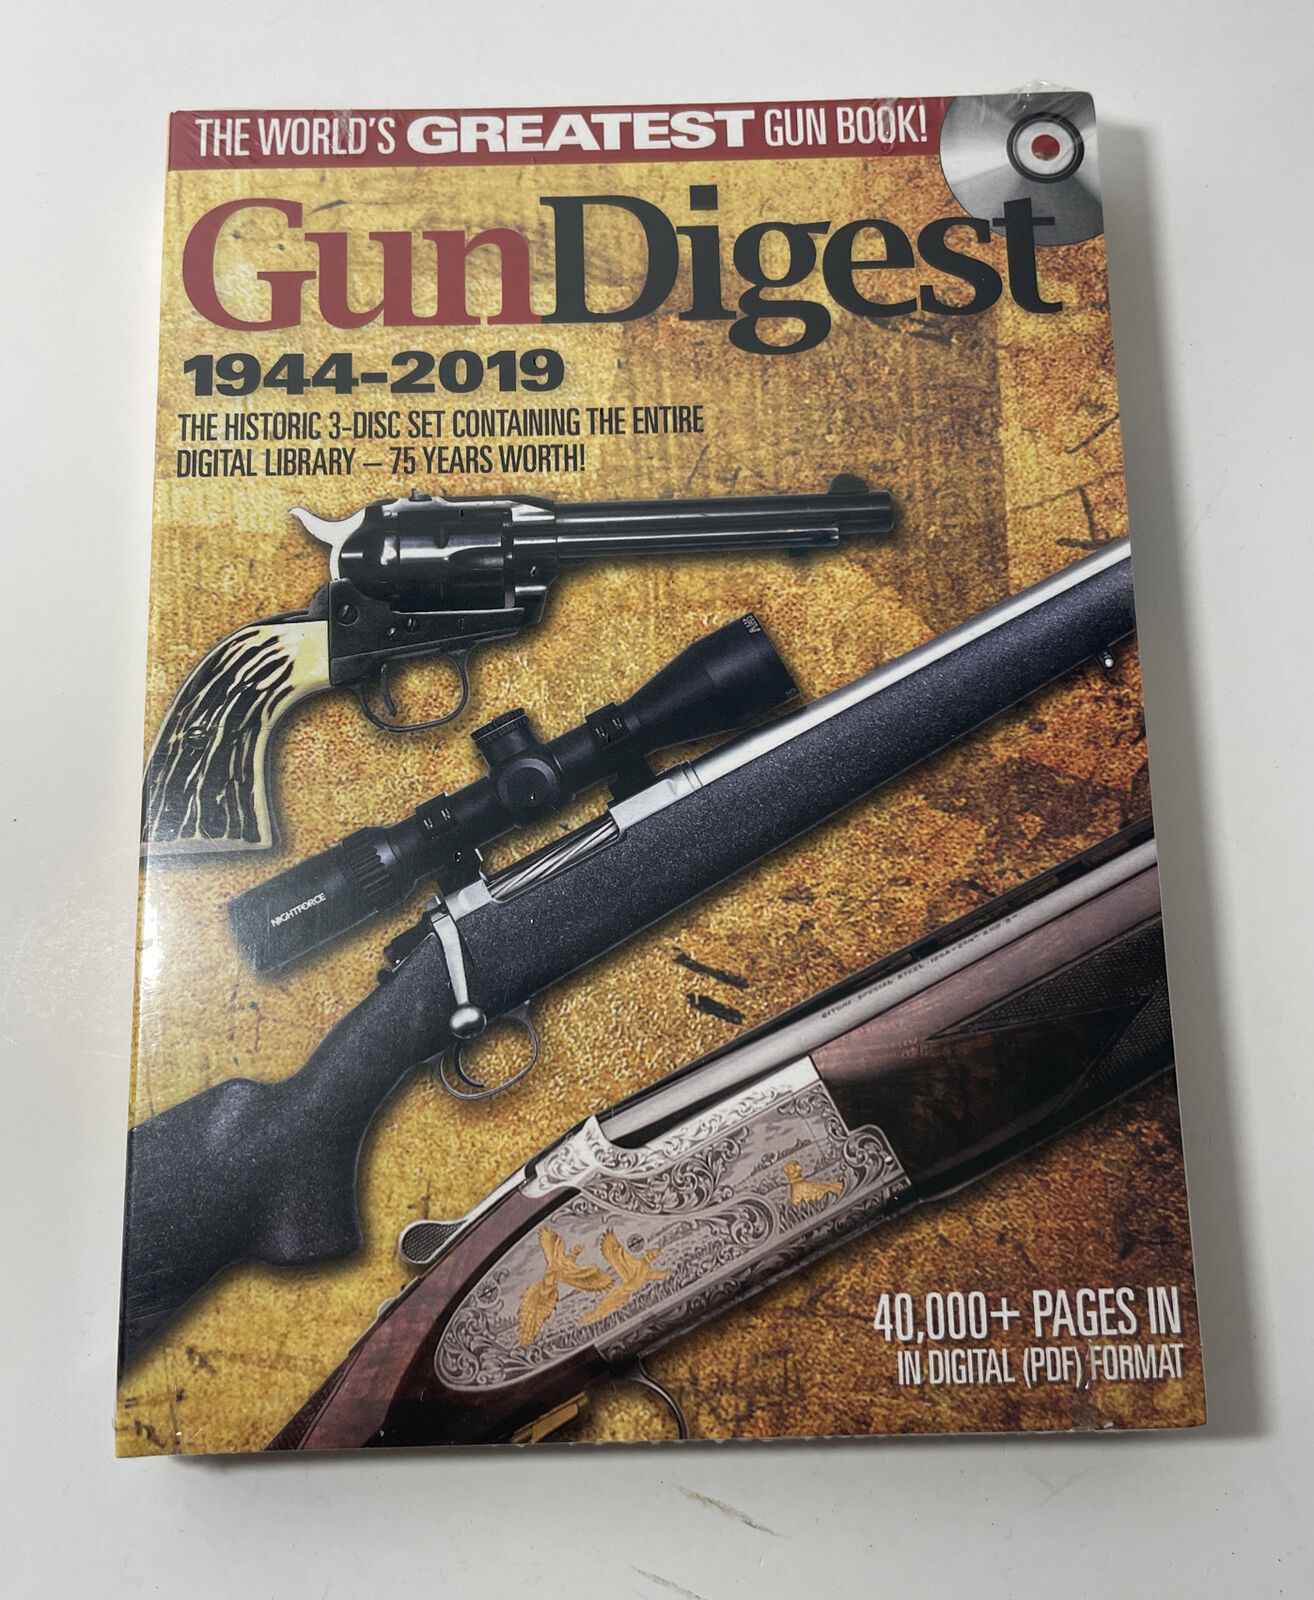 Gun Digest 1944-2019 Historic 3-disc Set Cd All 75 Years Digital Format $120 New